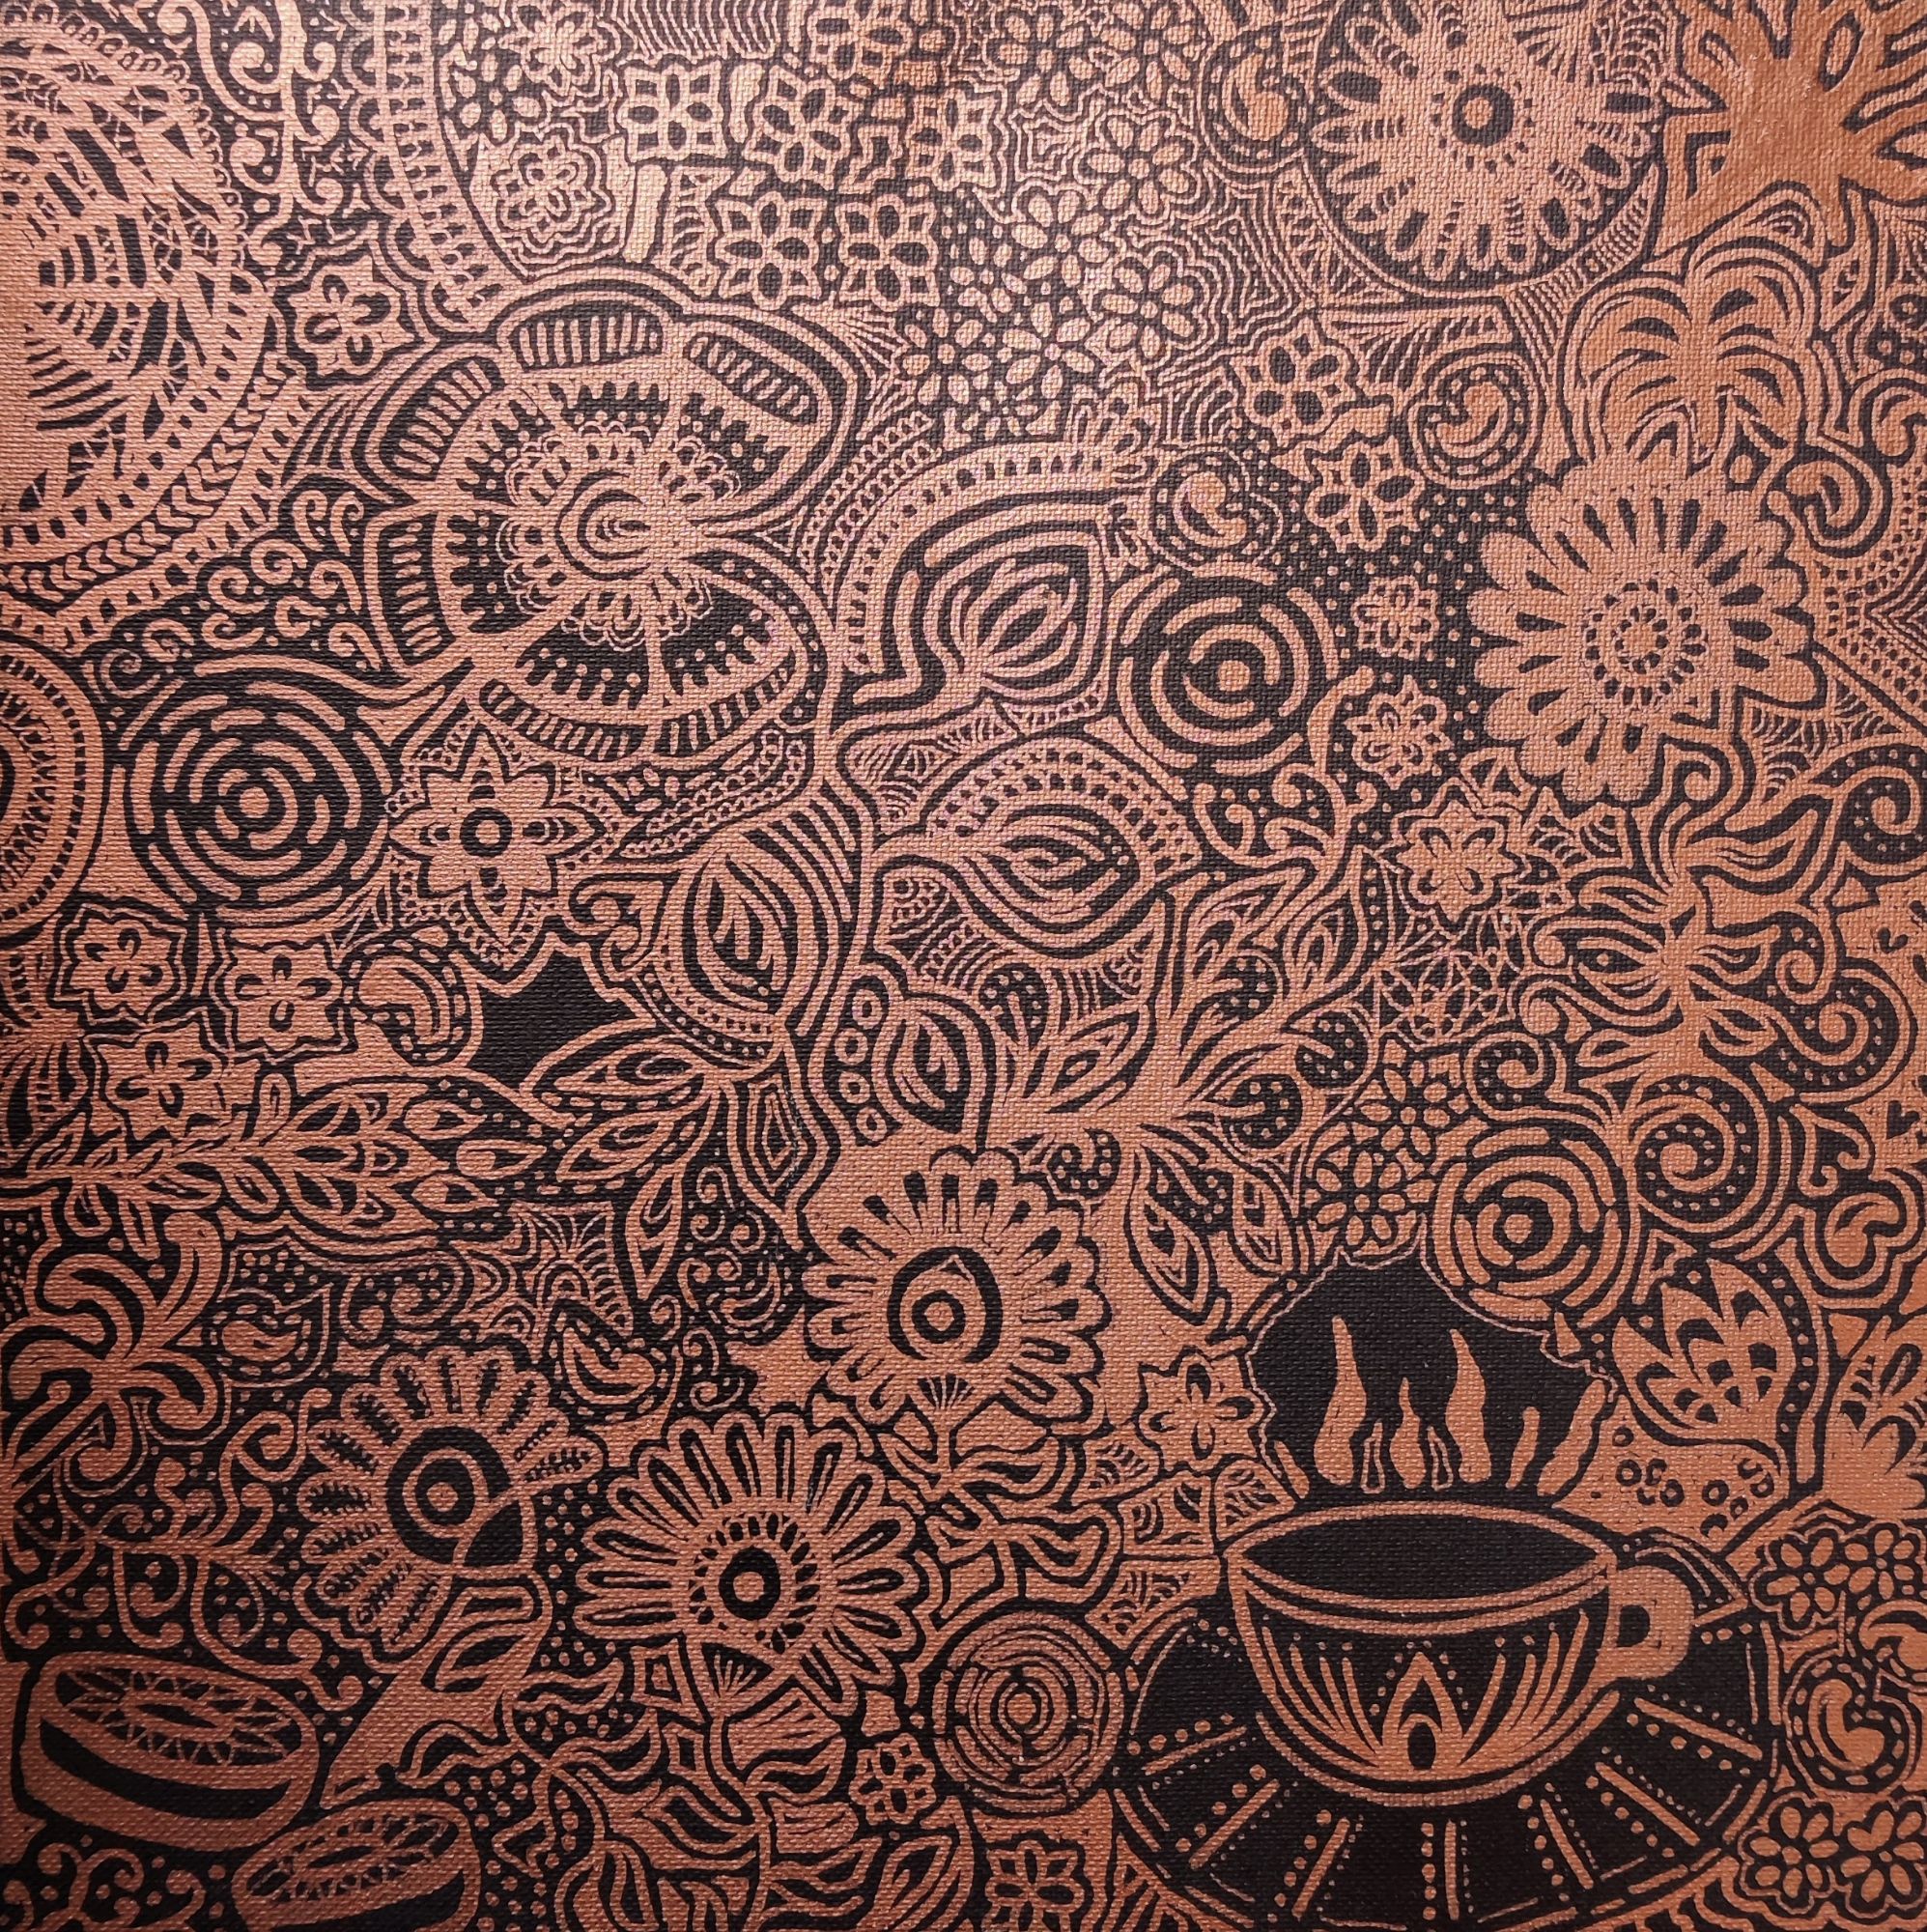 copper ink drawing mehndi henna design